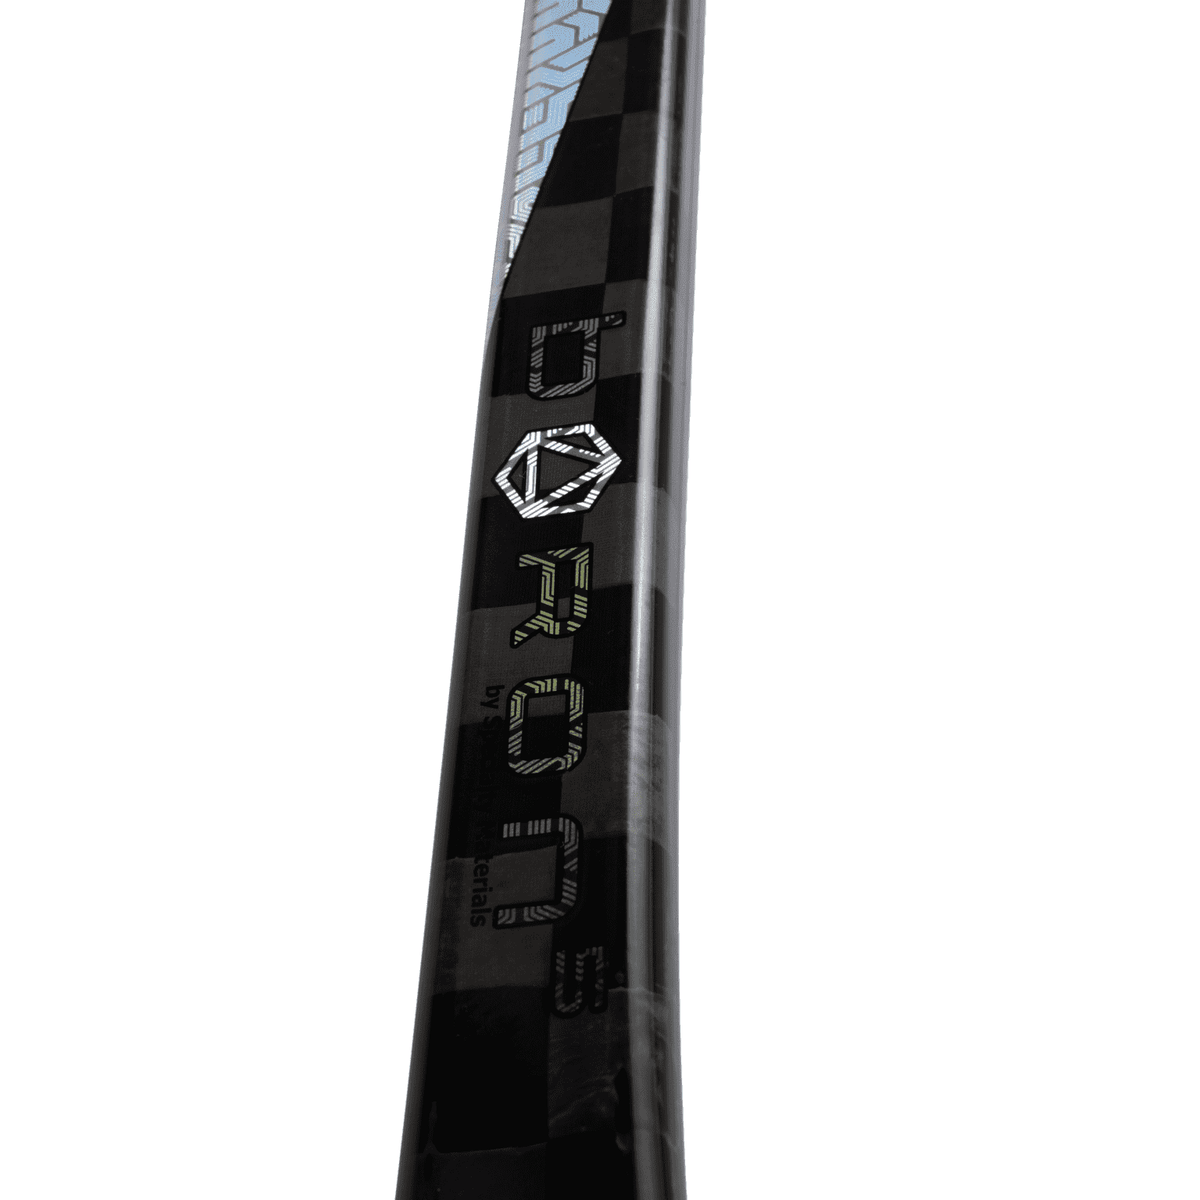 Bauer Proto R Ice Hockey Stick Intermediate